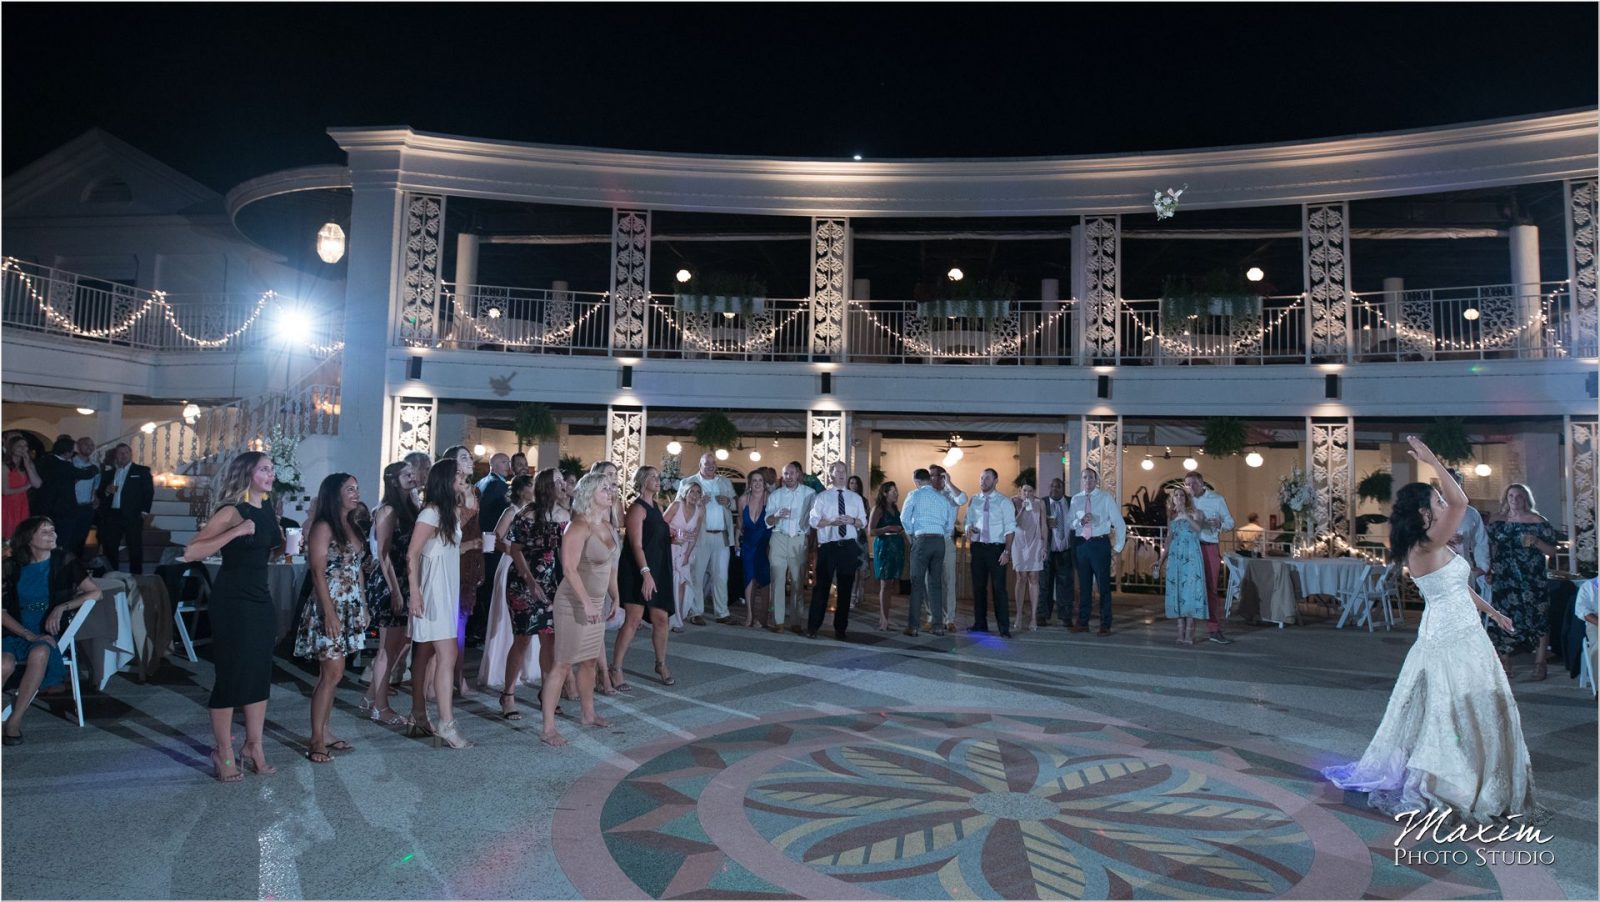 Moonlight Gardens Coney Wedding Reception dance